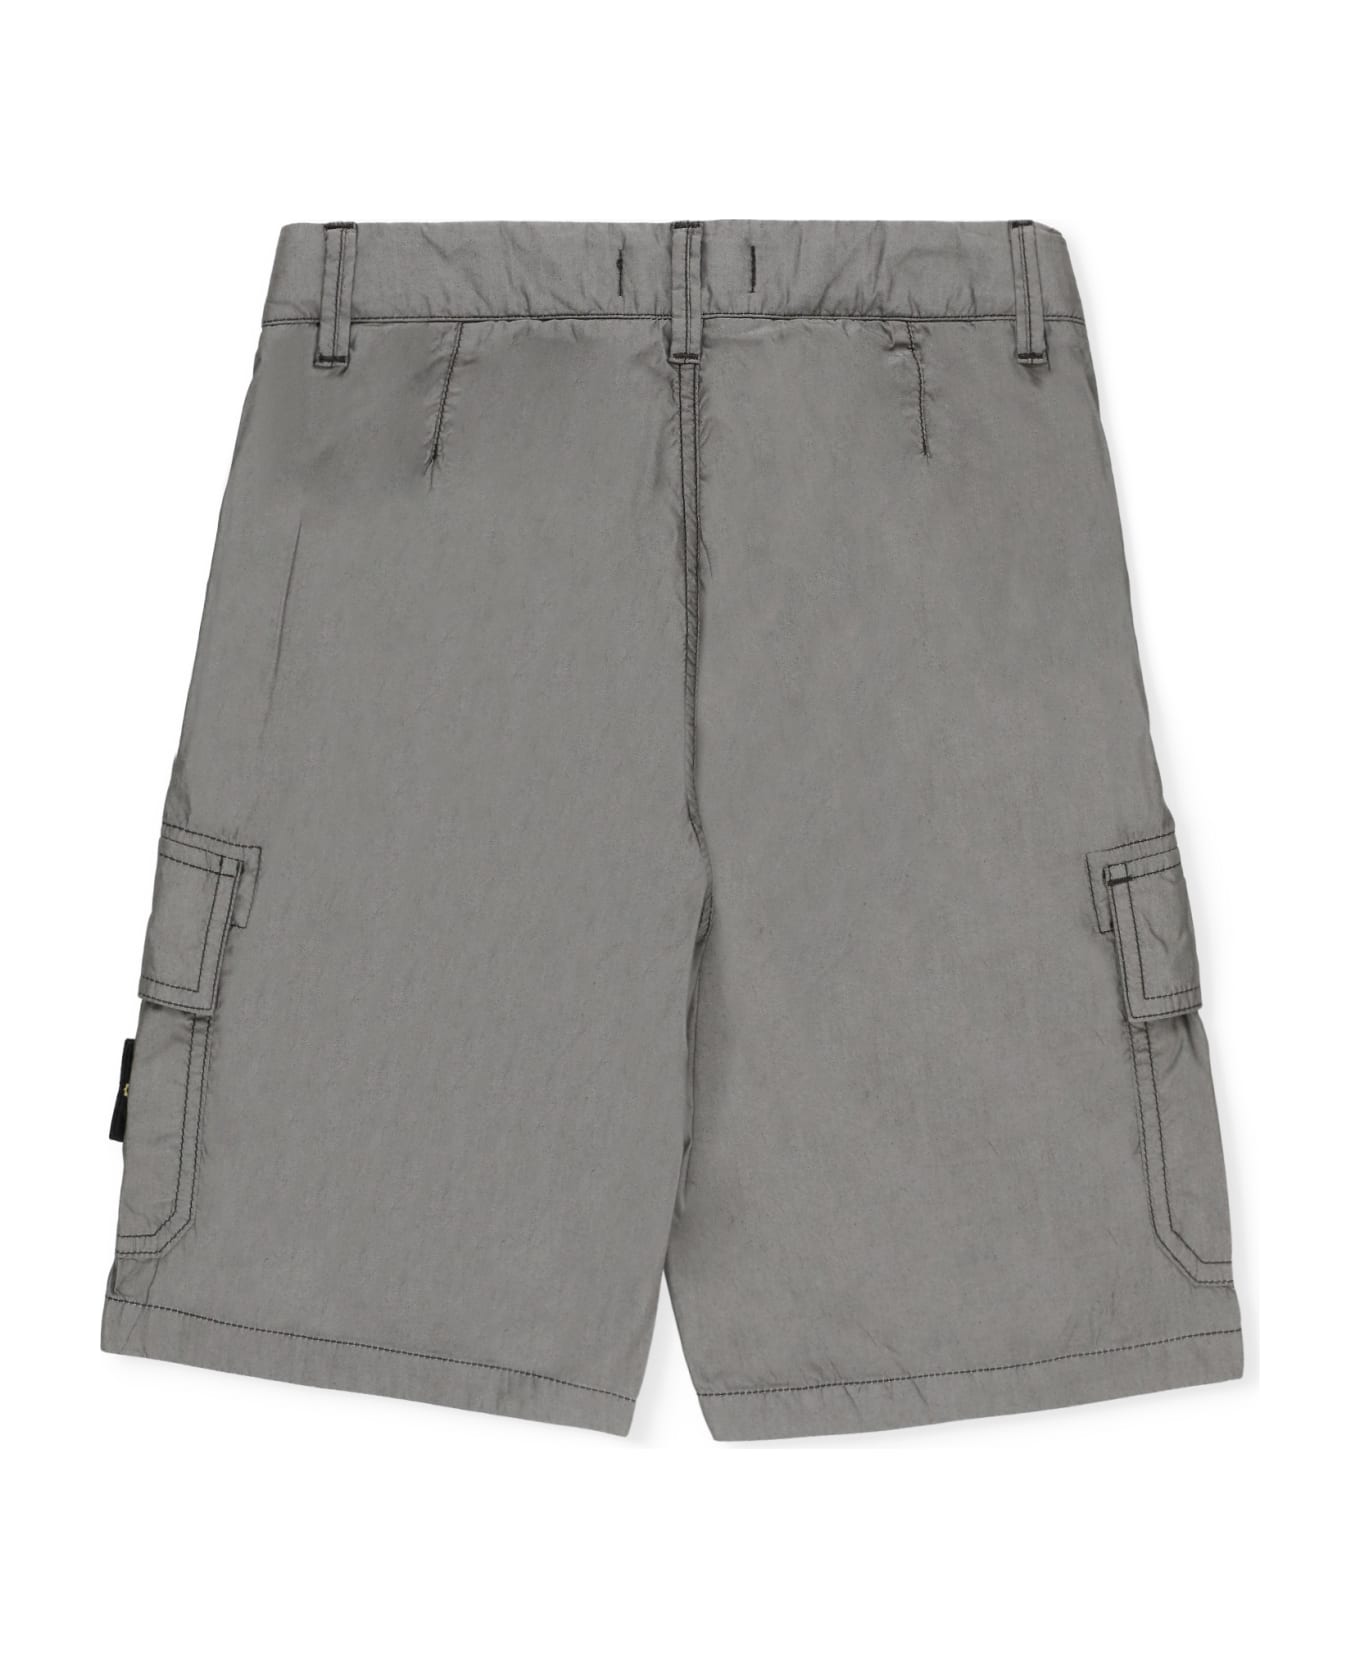 Stone Island Cotton Bermuda Shorts - Grey ボトムス